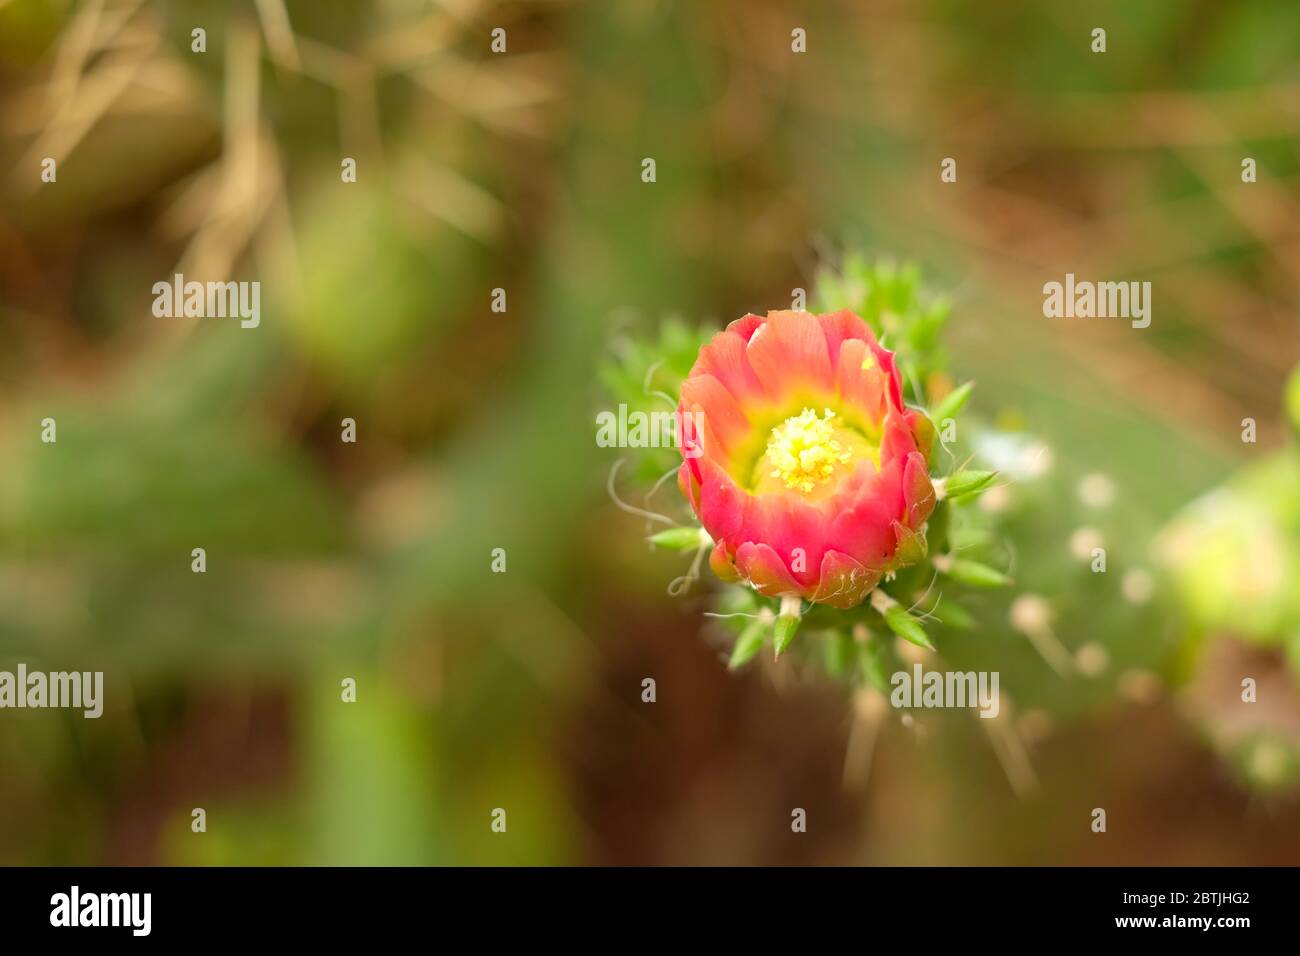 Bel fiore rosso di cactus di apertura. Foto Stock